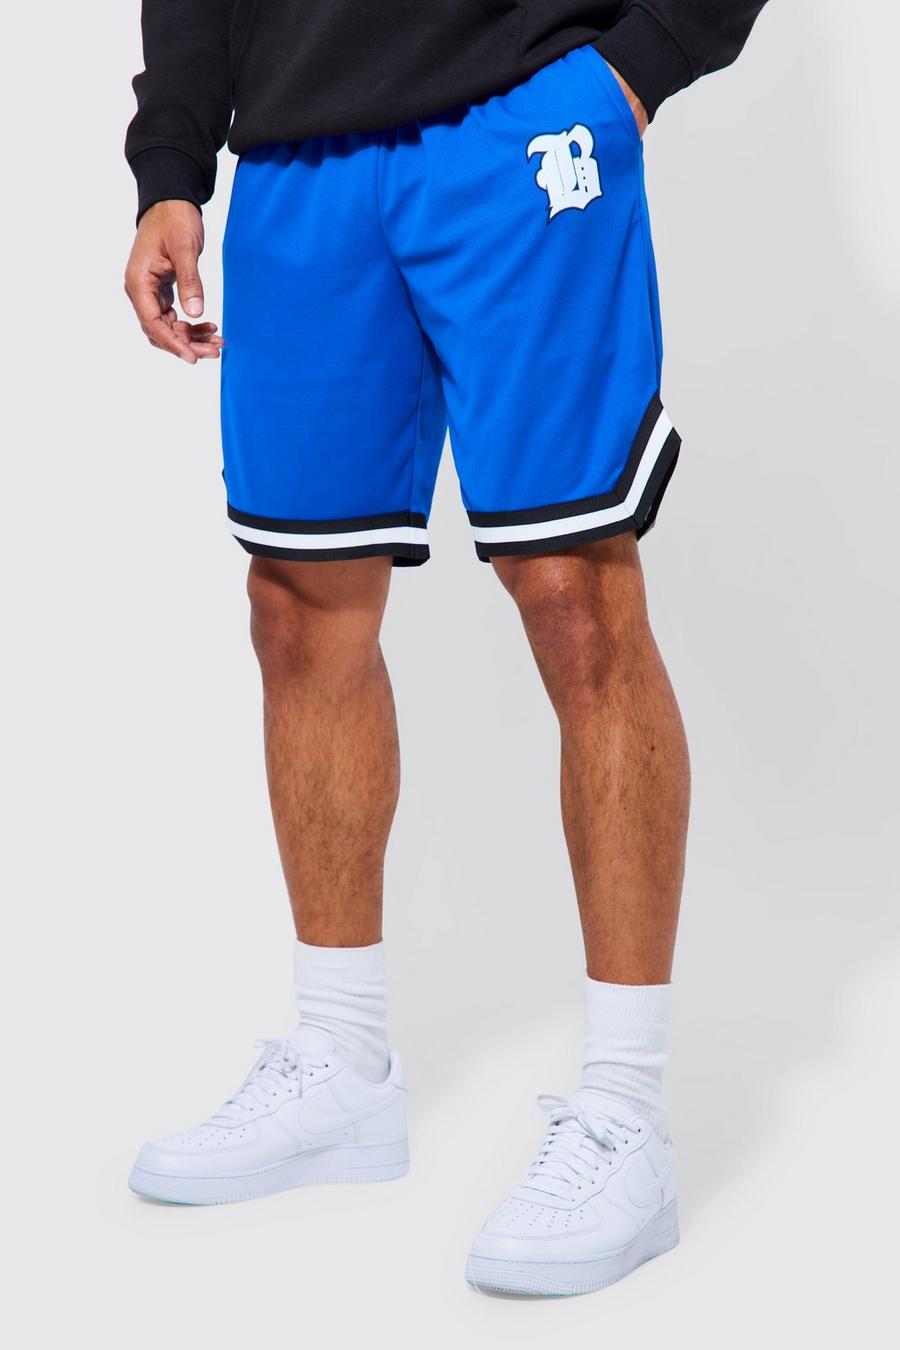 Royal blue Loose Fit Mid Length Basketball Short 